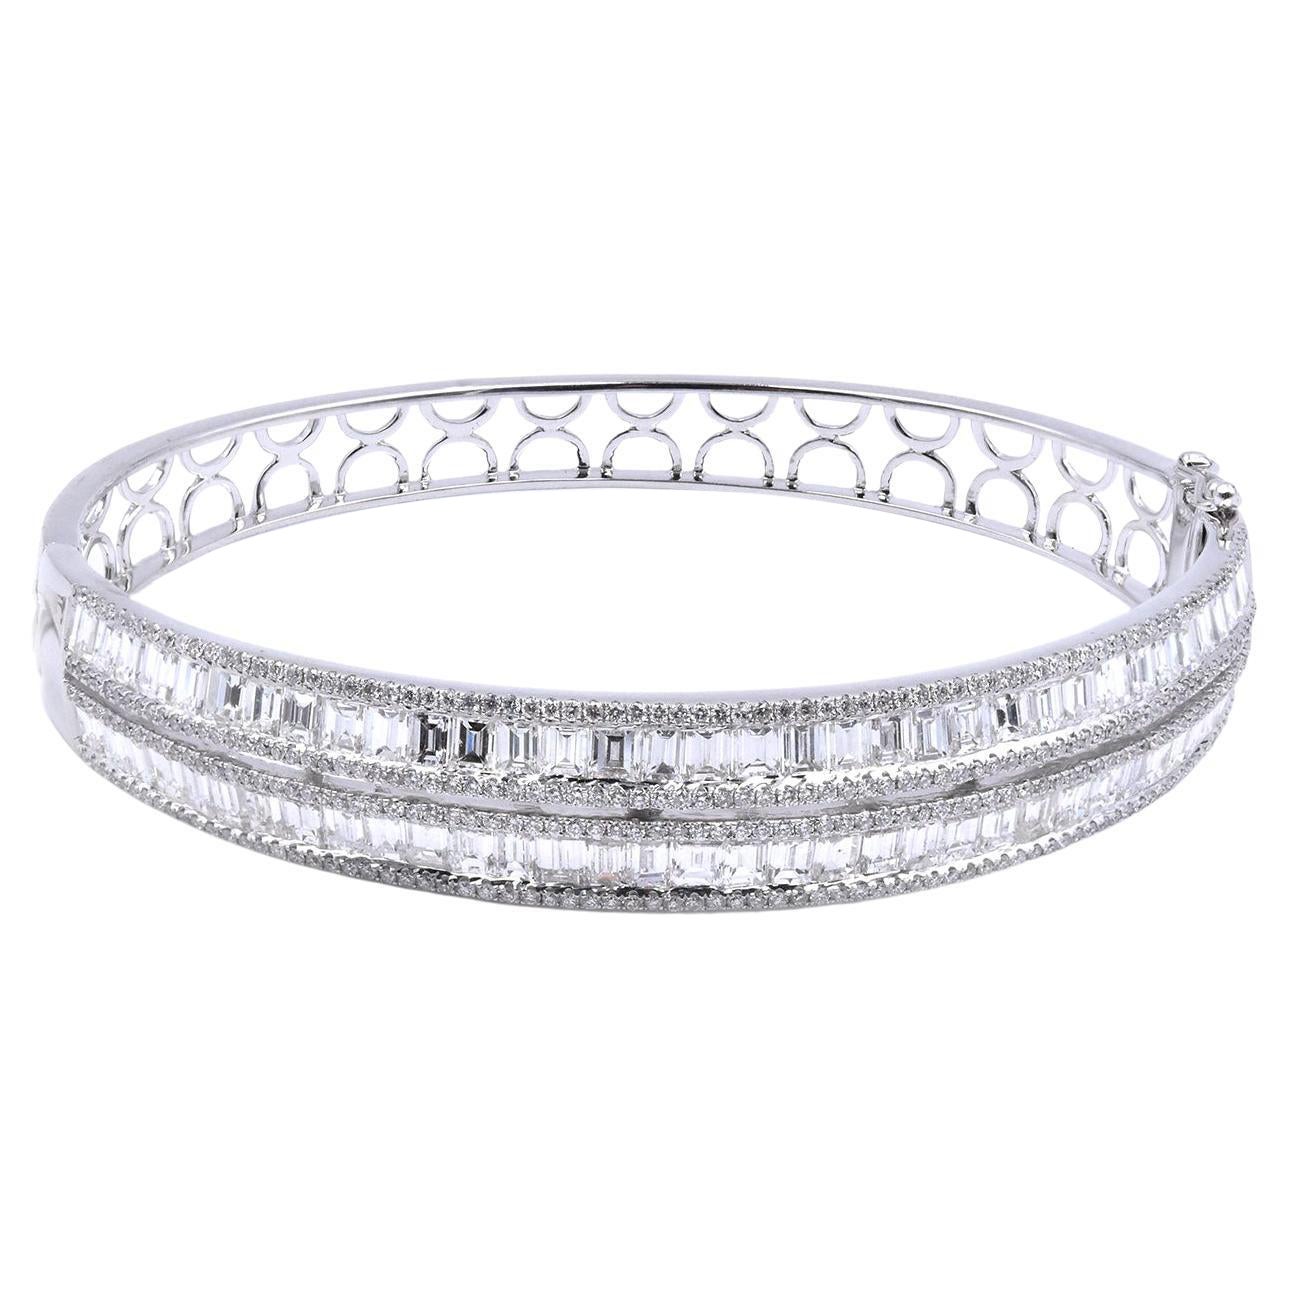 18 Karat White Gold Double Row Mosaic Set Diamond Bangle Bracelet